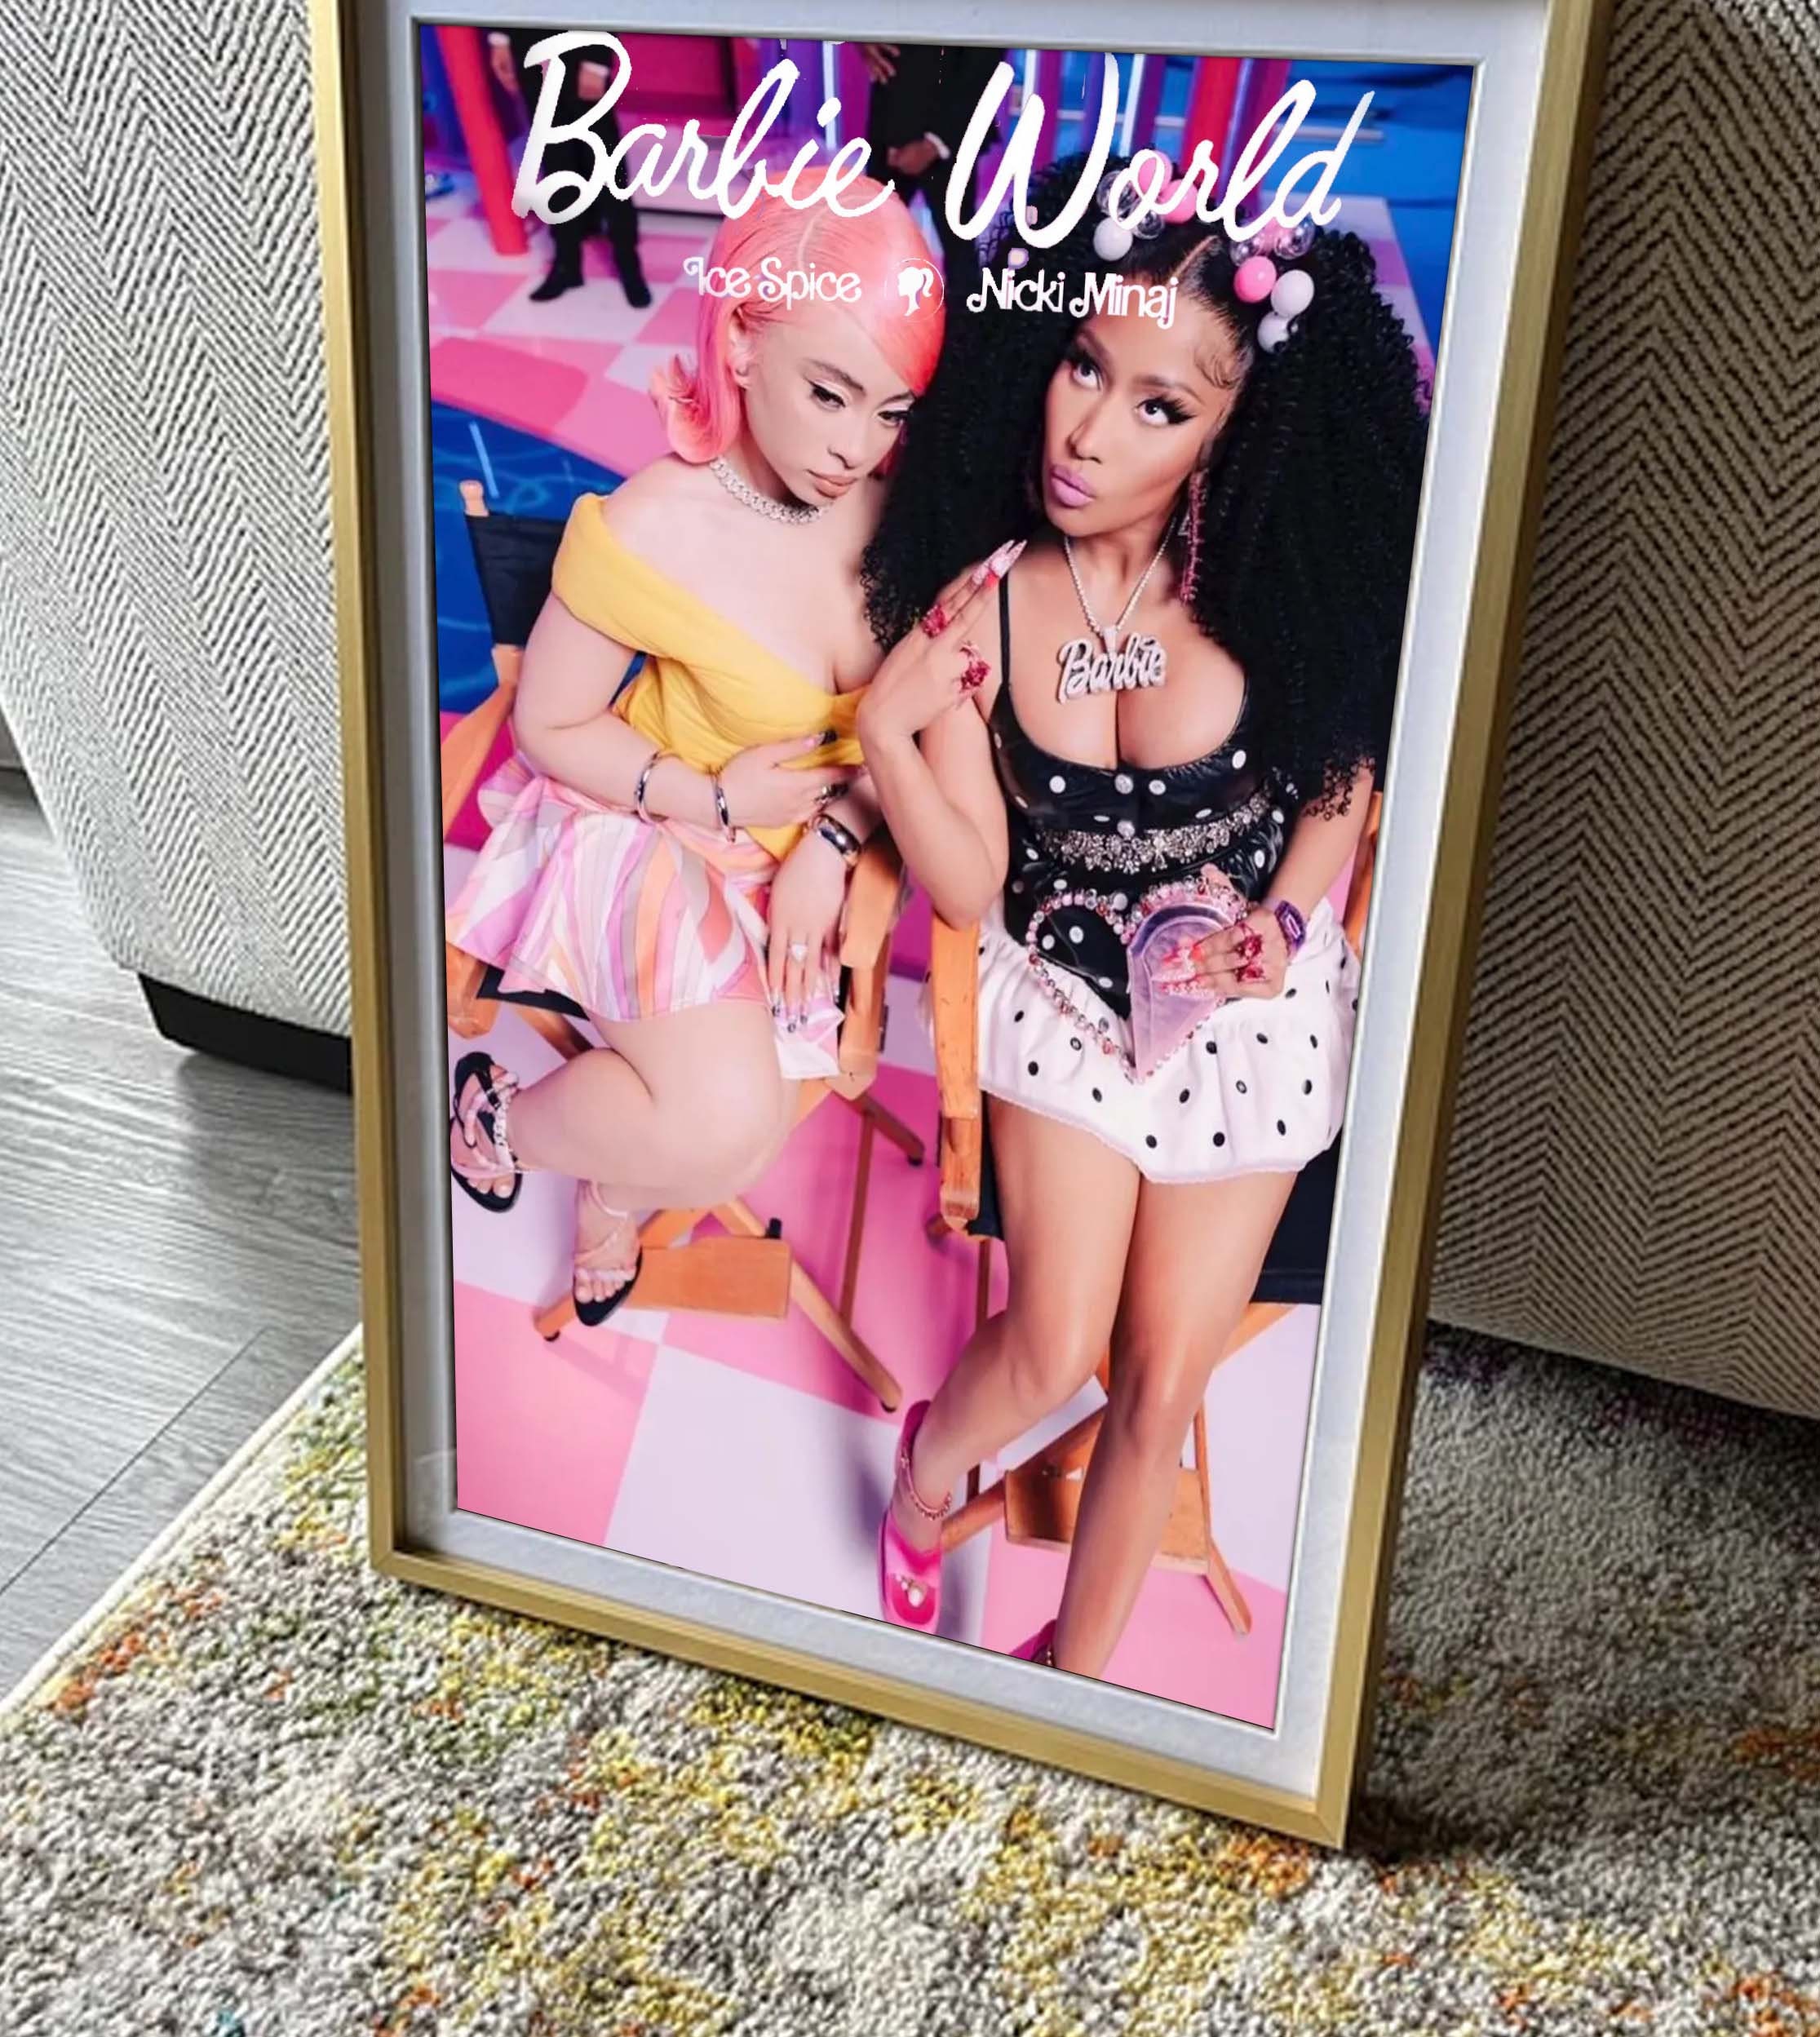 Barbie World Nicki Minaj Ice Spice Poster, Gift For Fan